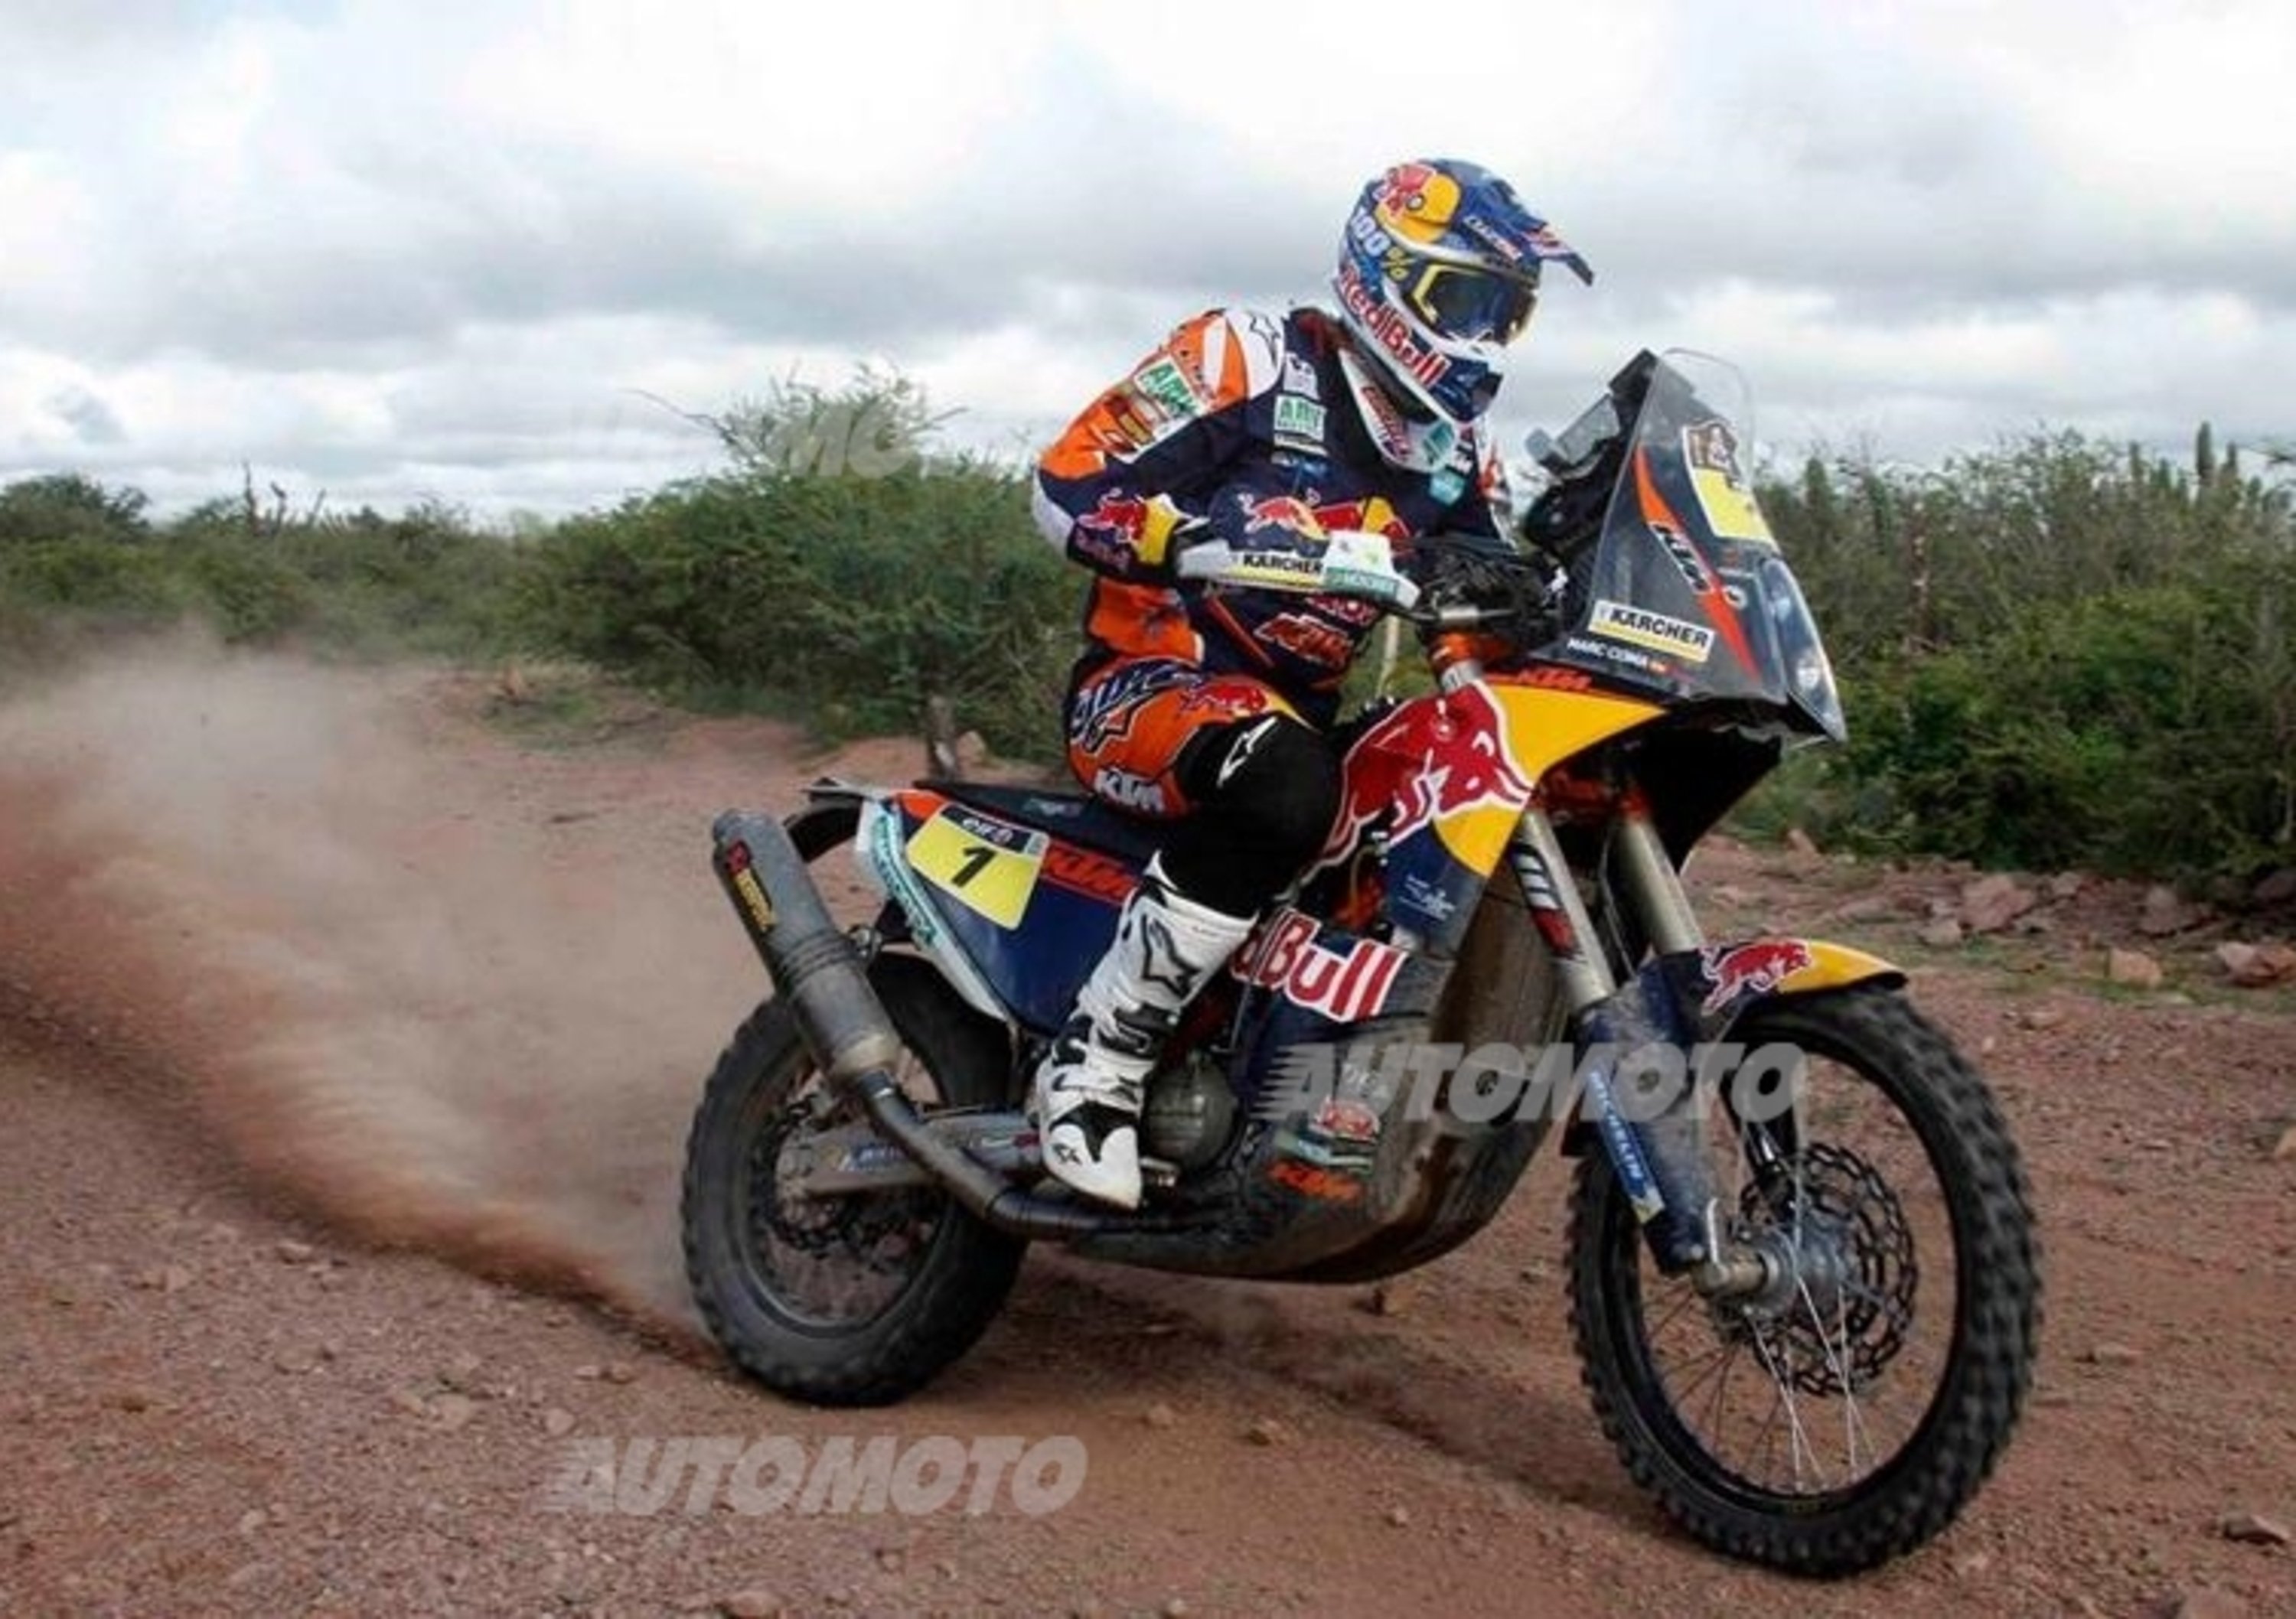 Dakar 2015: vittoria finale per Coma (KTM) e Al-Attiyah (Mini)